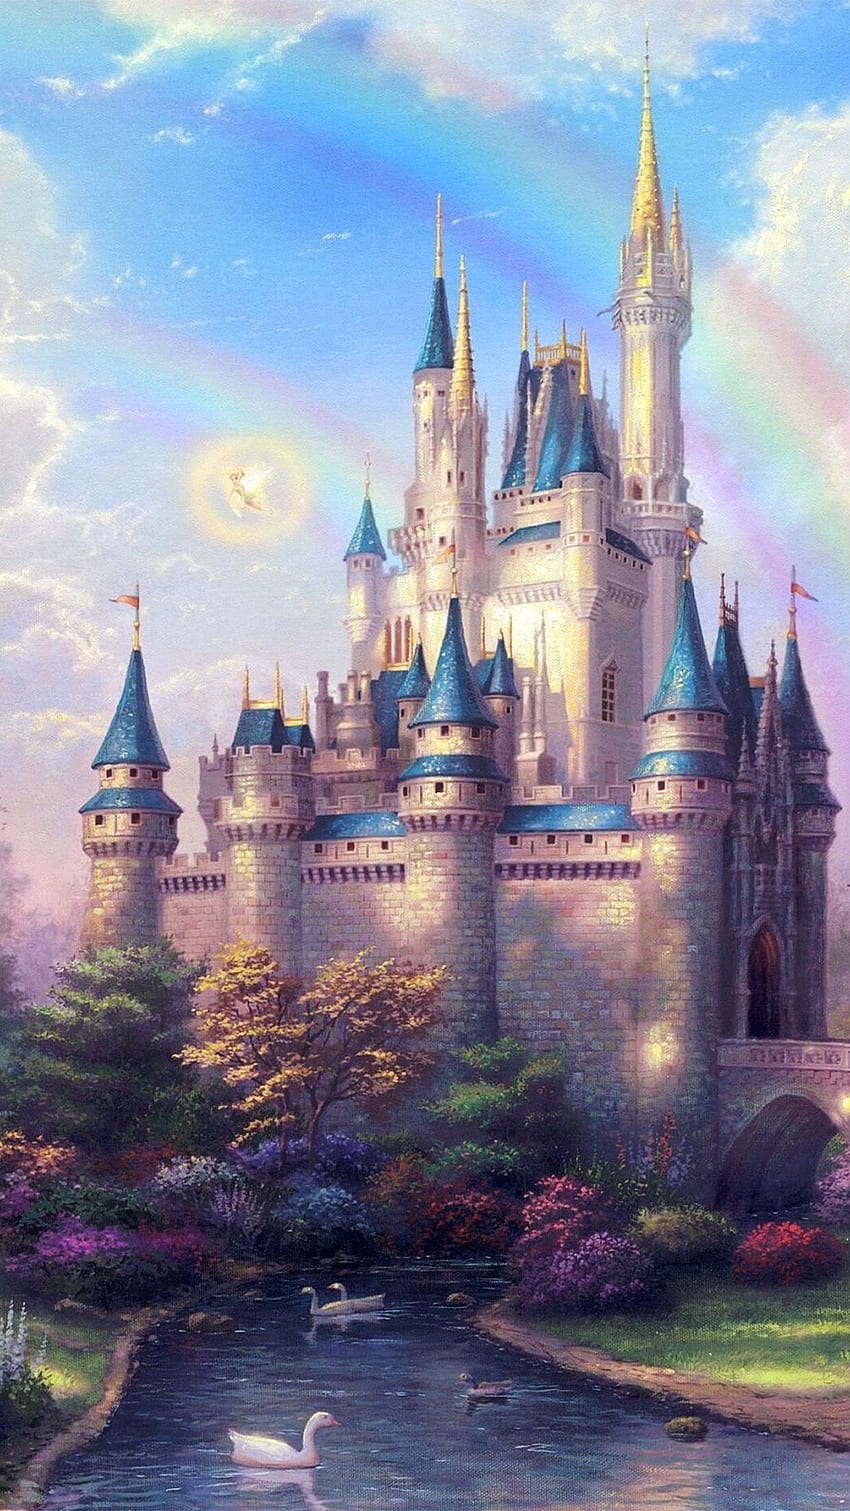 Ilustrasi Kastil Fantasi Disney Lucu, iPhone 8 Disney wallpaper ponsel HD